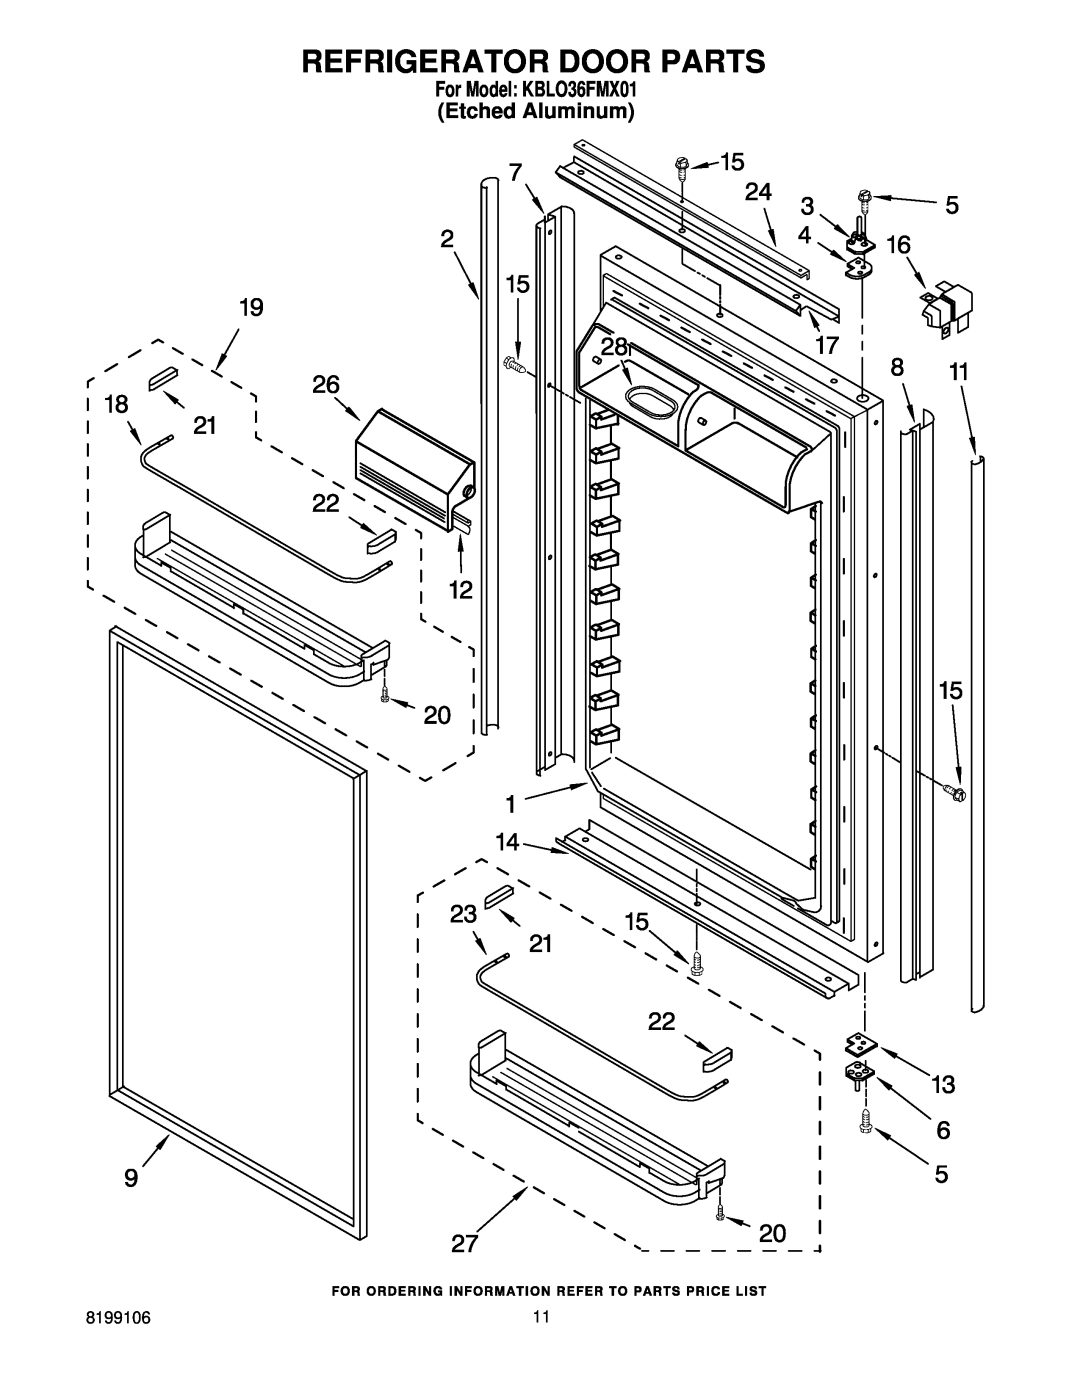 KitchenAid manual Refrigerator Door Parts, For Model KBLO36FMX01 Etched Aluminum 